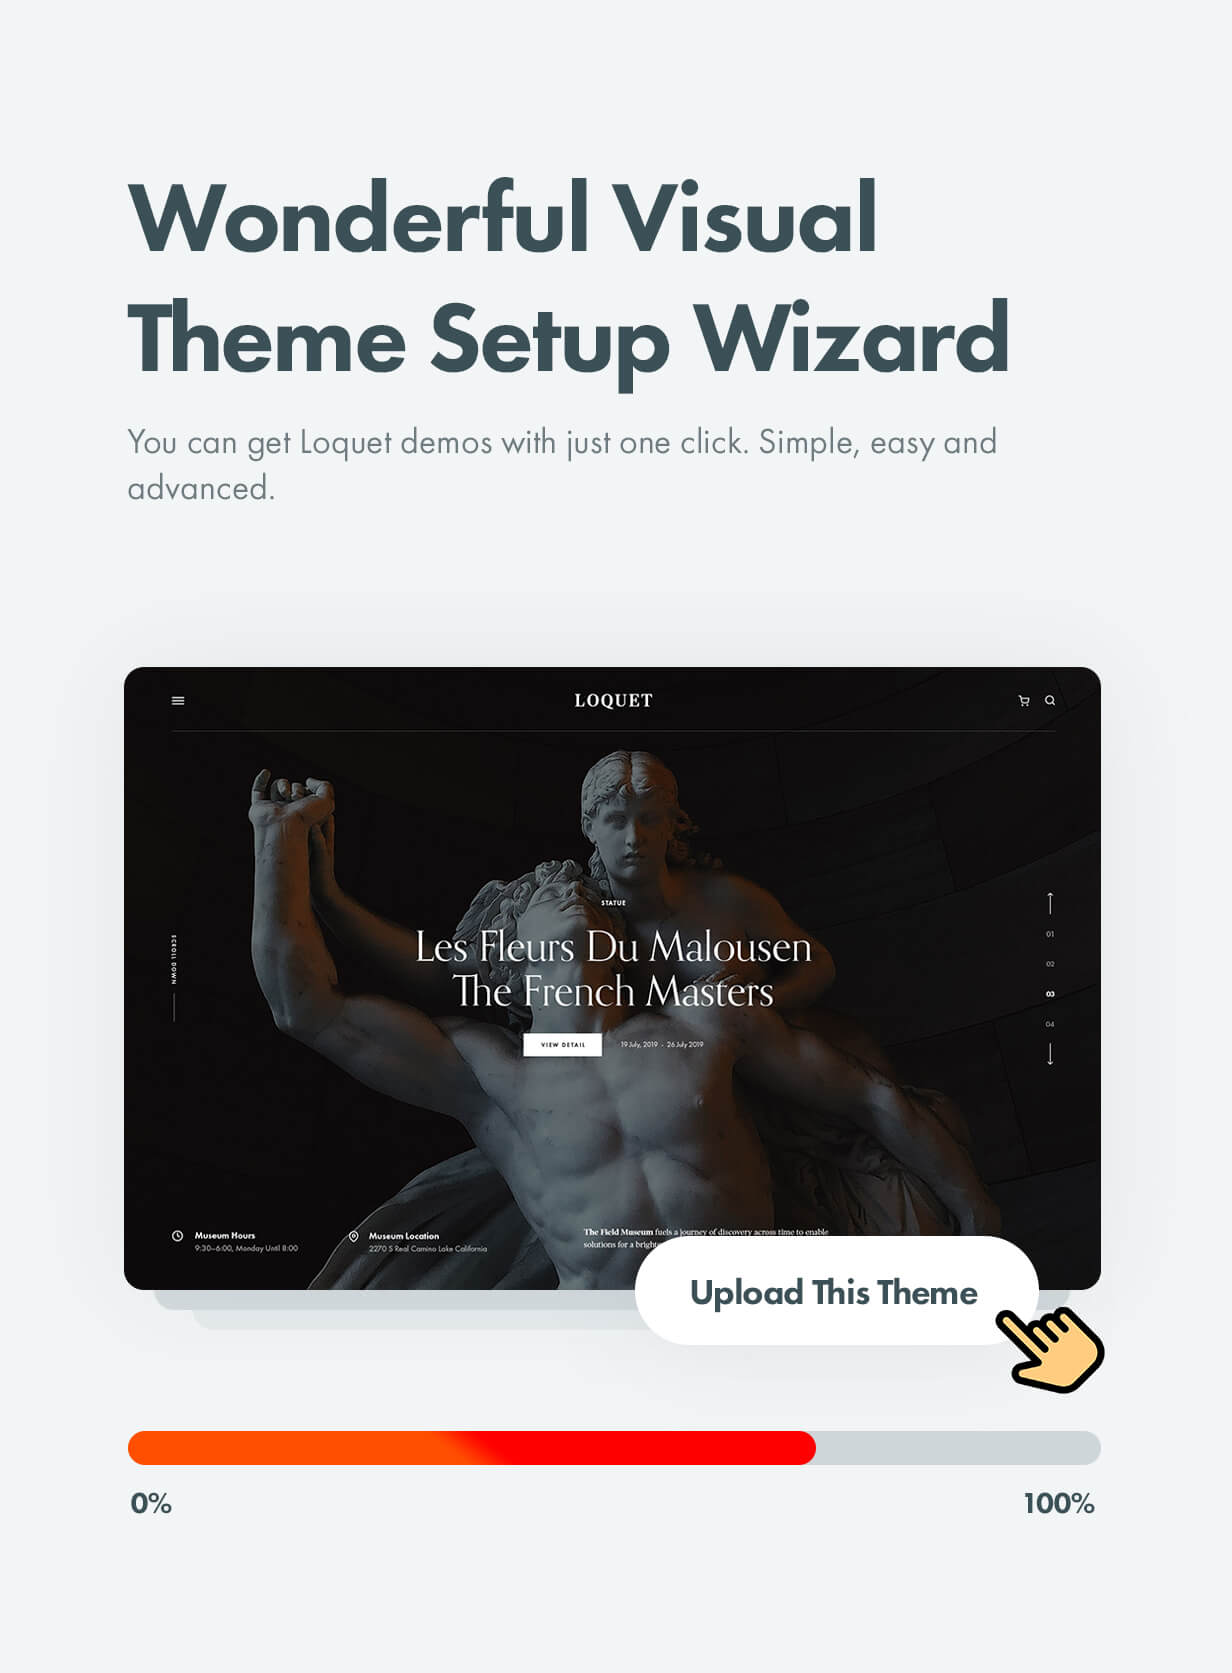 Wonderful visual theme setup Wizard